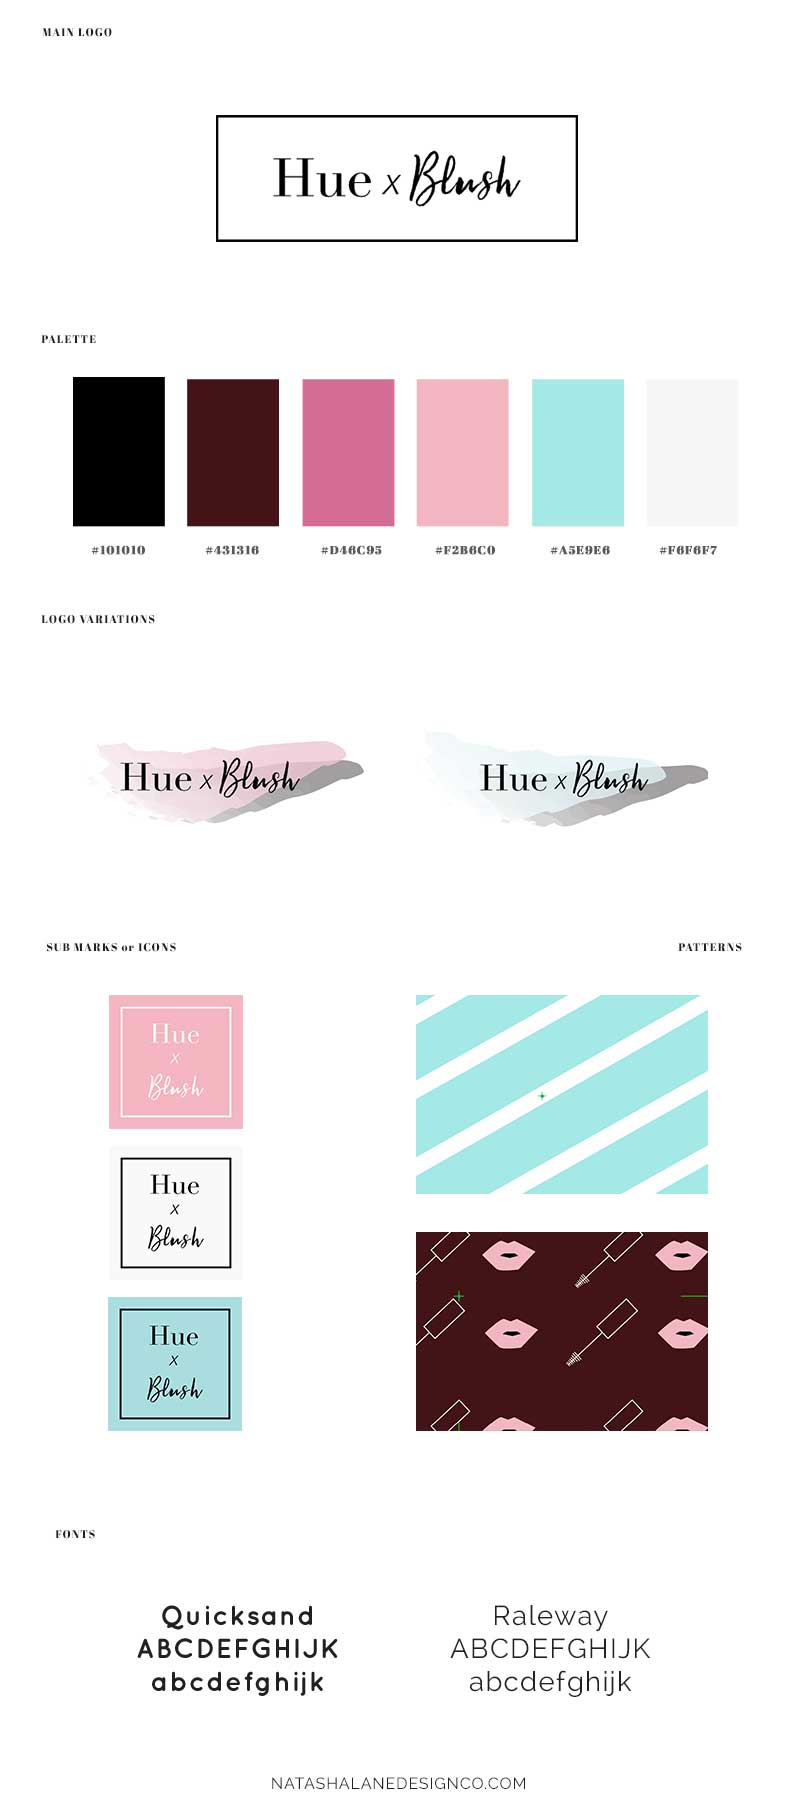 Brand x Web Design for Hue x Blush variation logo brand board